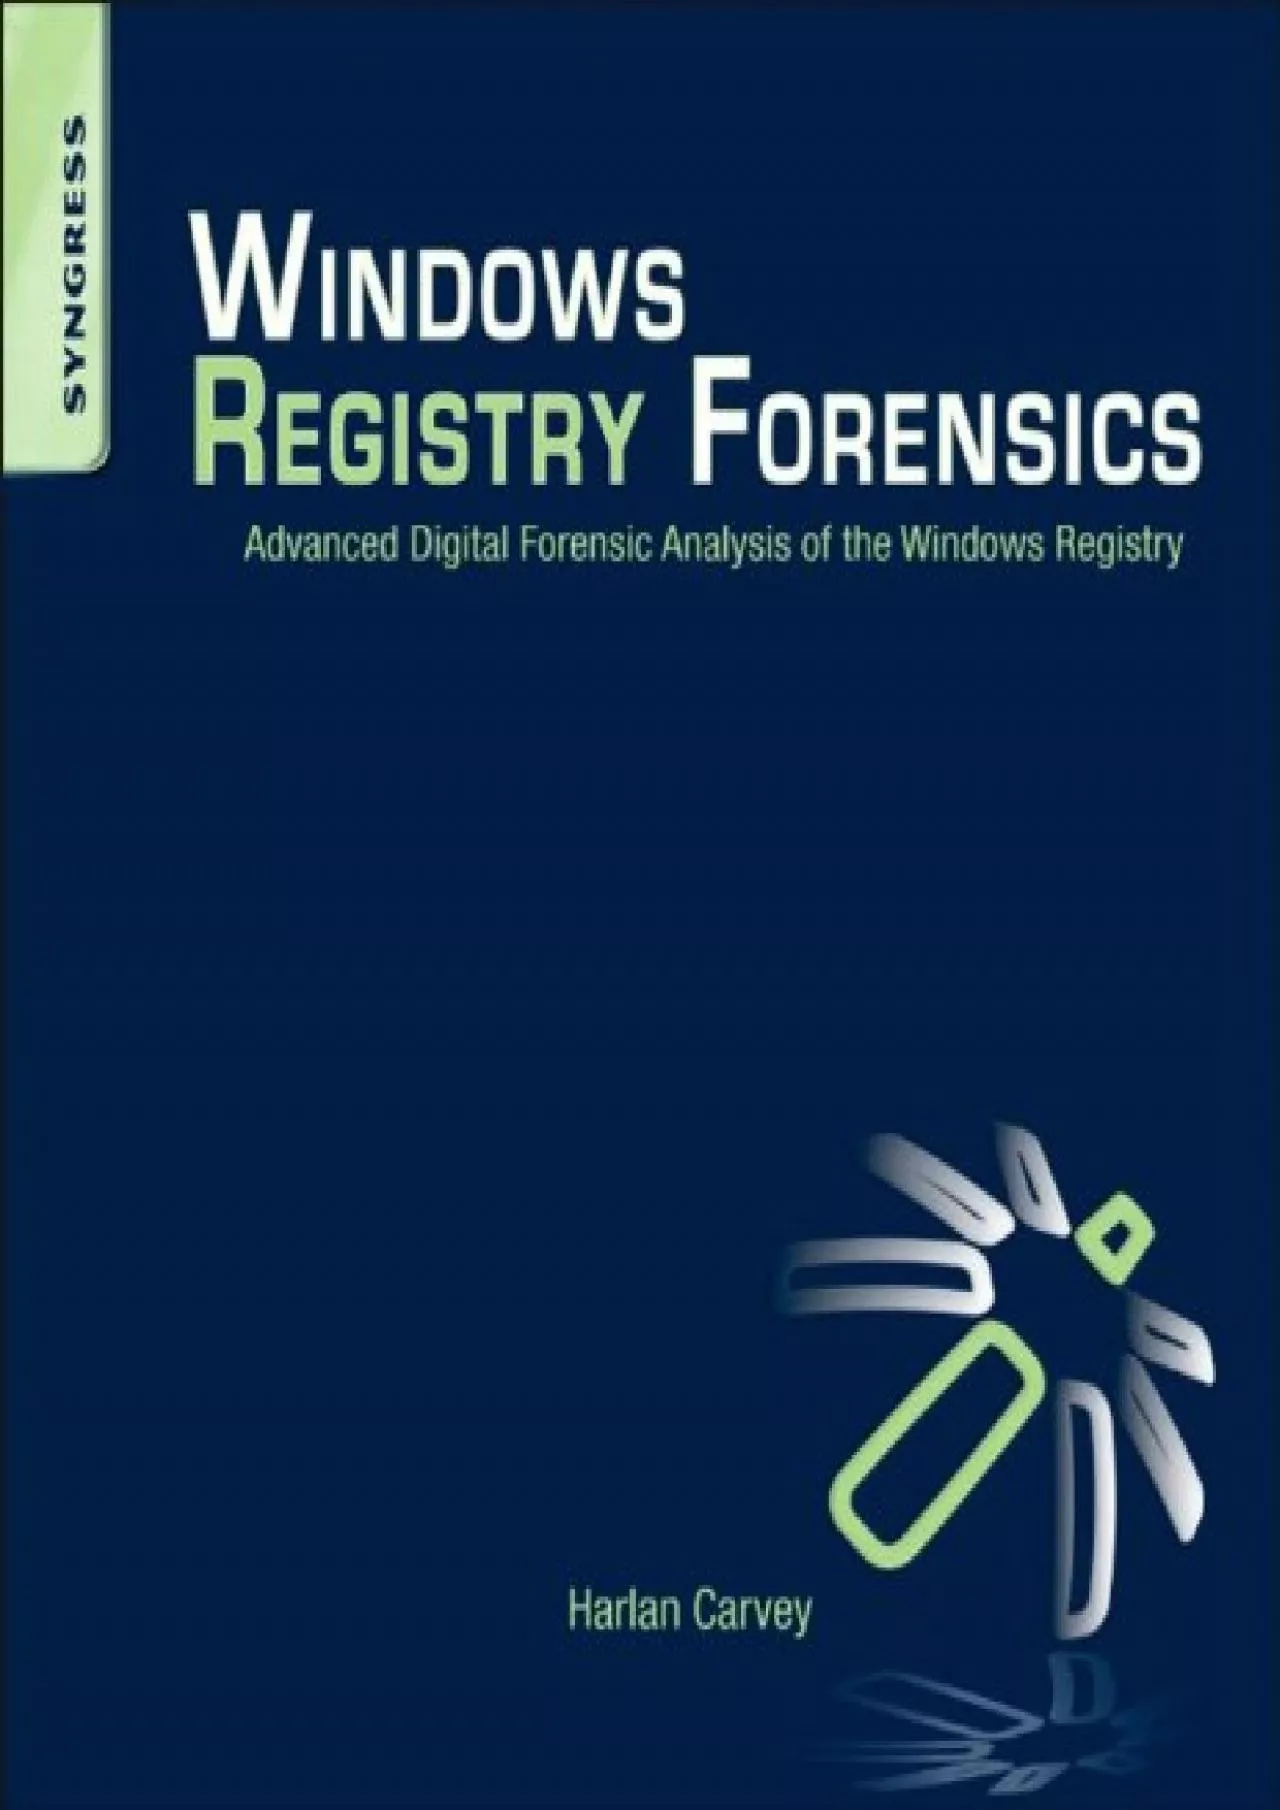 (EBOOK)-Windows Registry Forensics: Advanced Digital Forensic Analysis of the Windows